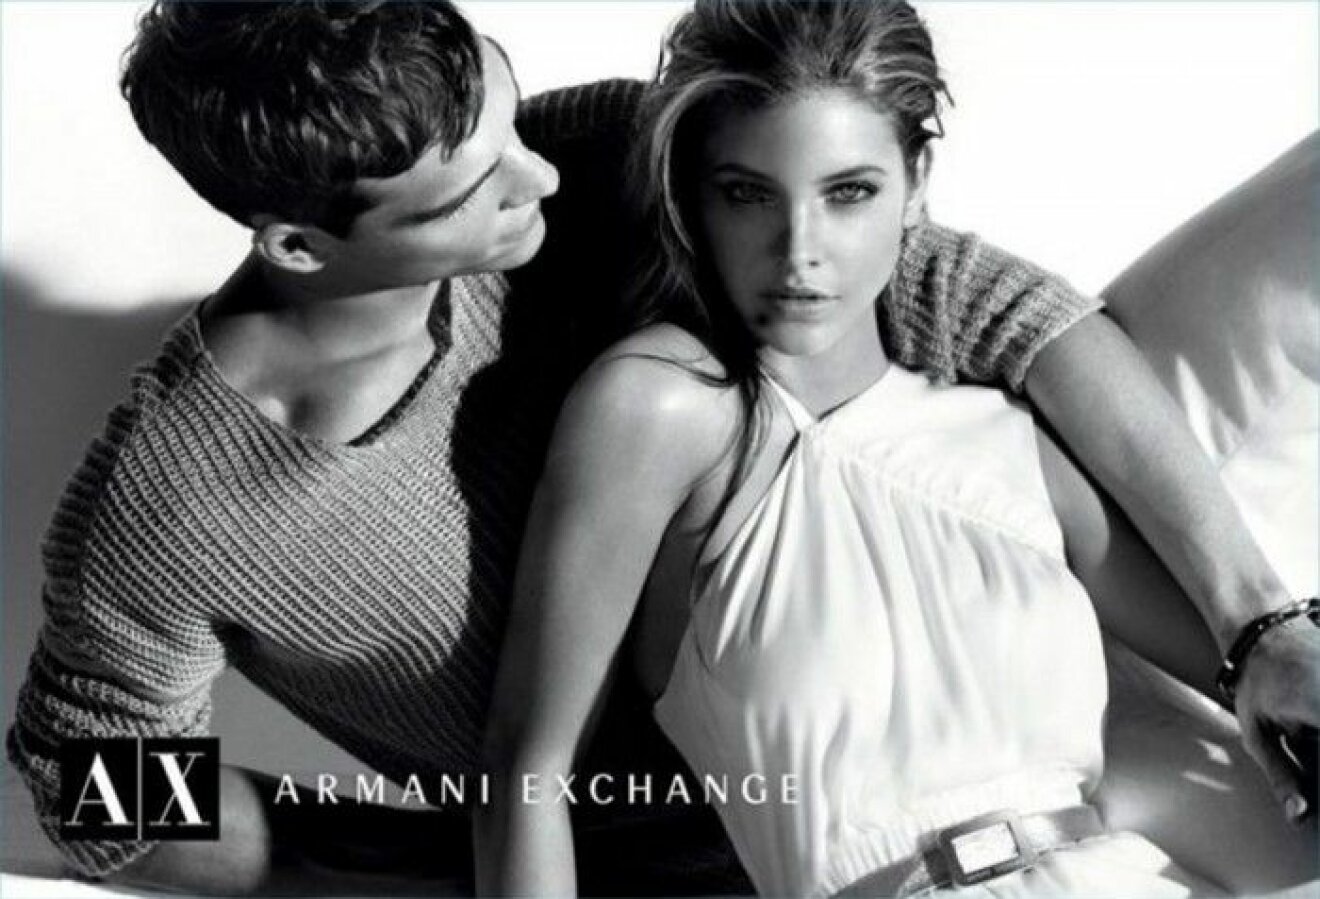 Barbara-Palvin-Armani-Exchange-Summer-Pop-Campaign-2012-6451-708x483